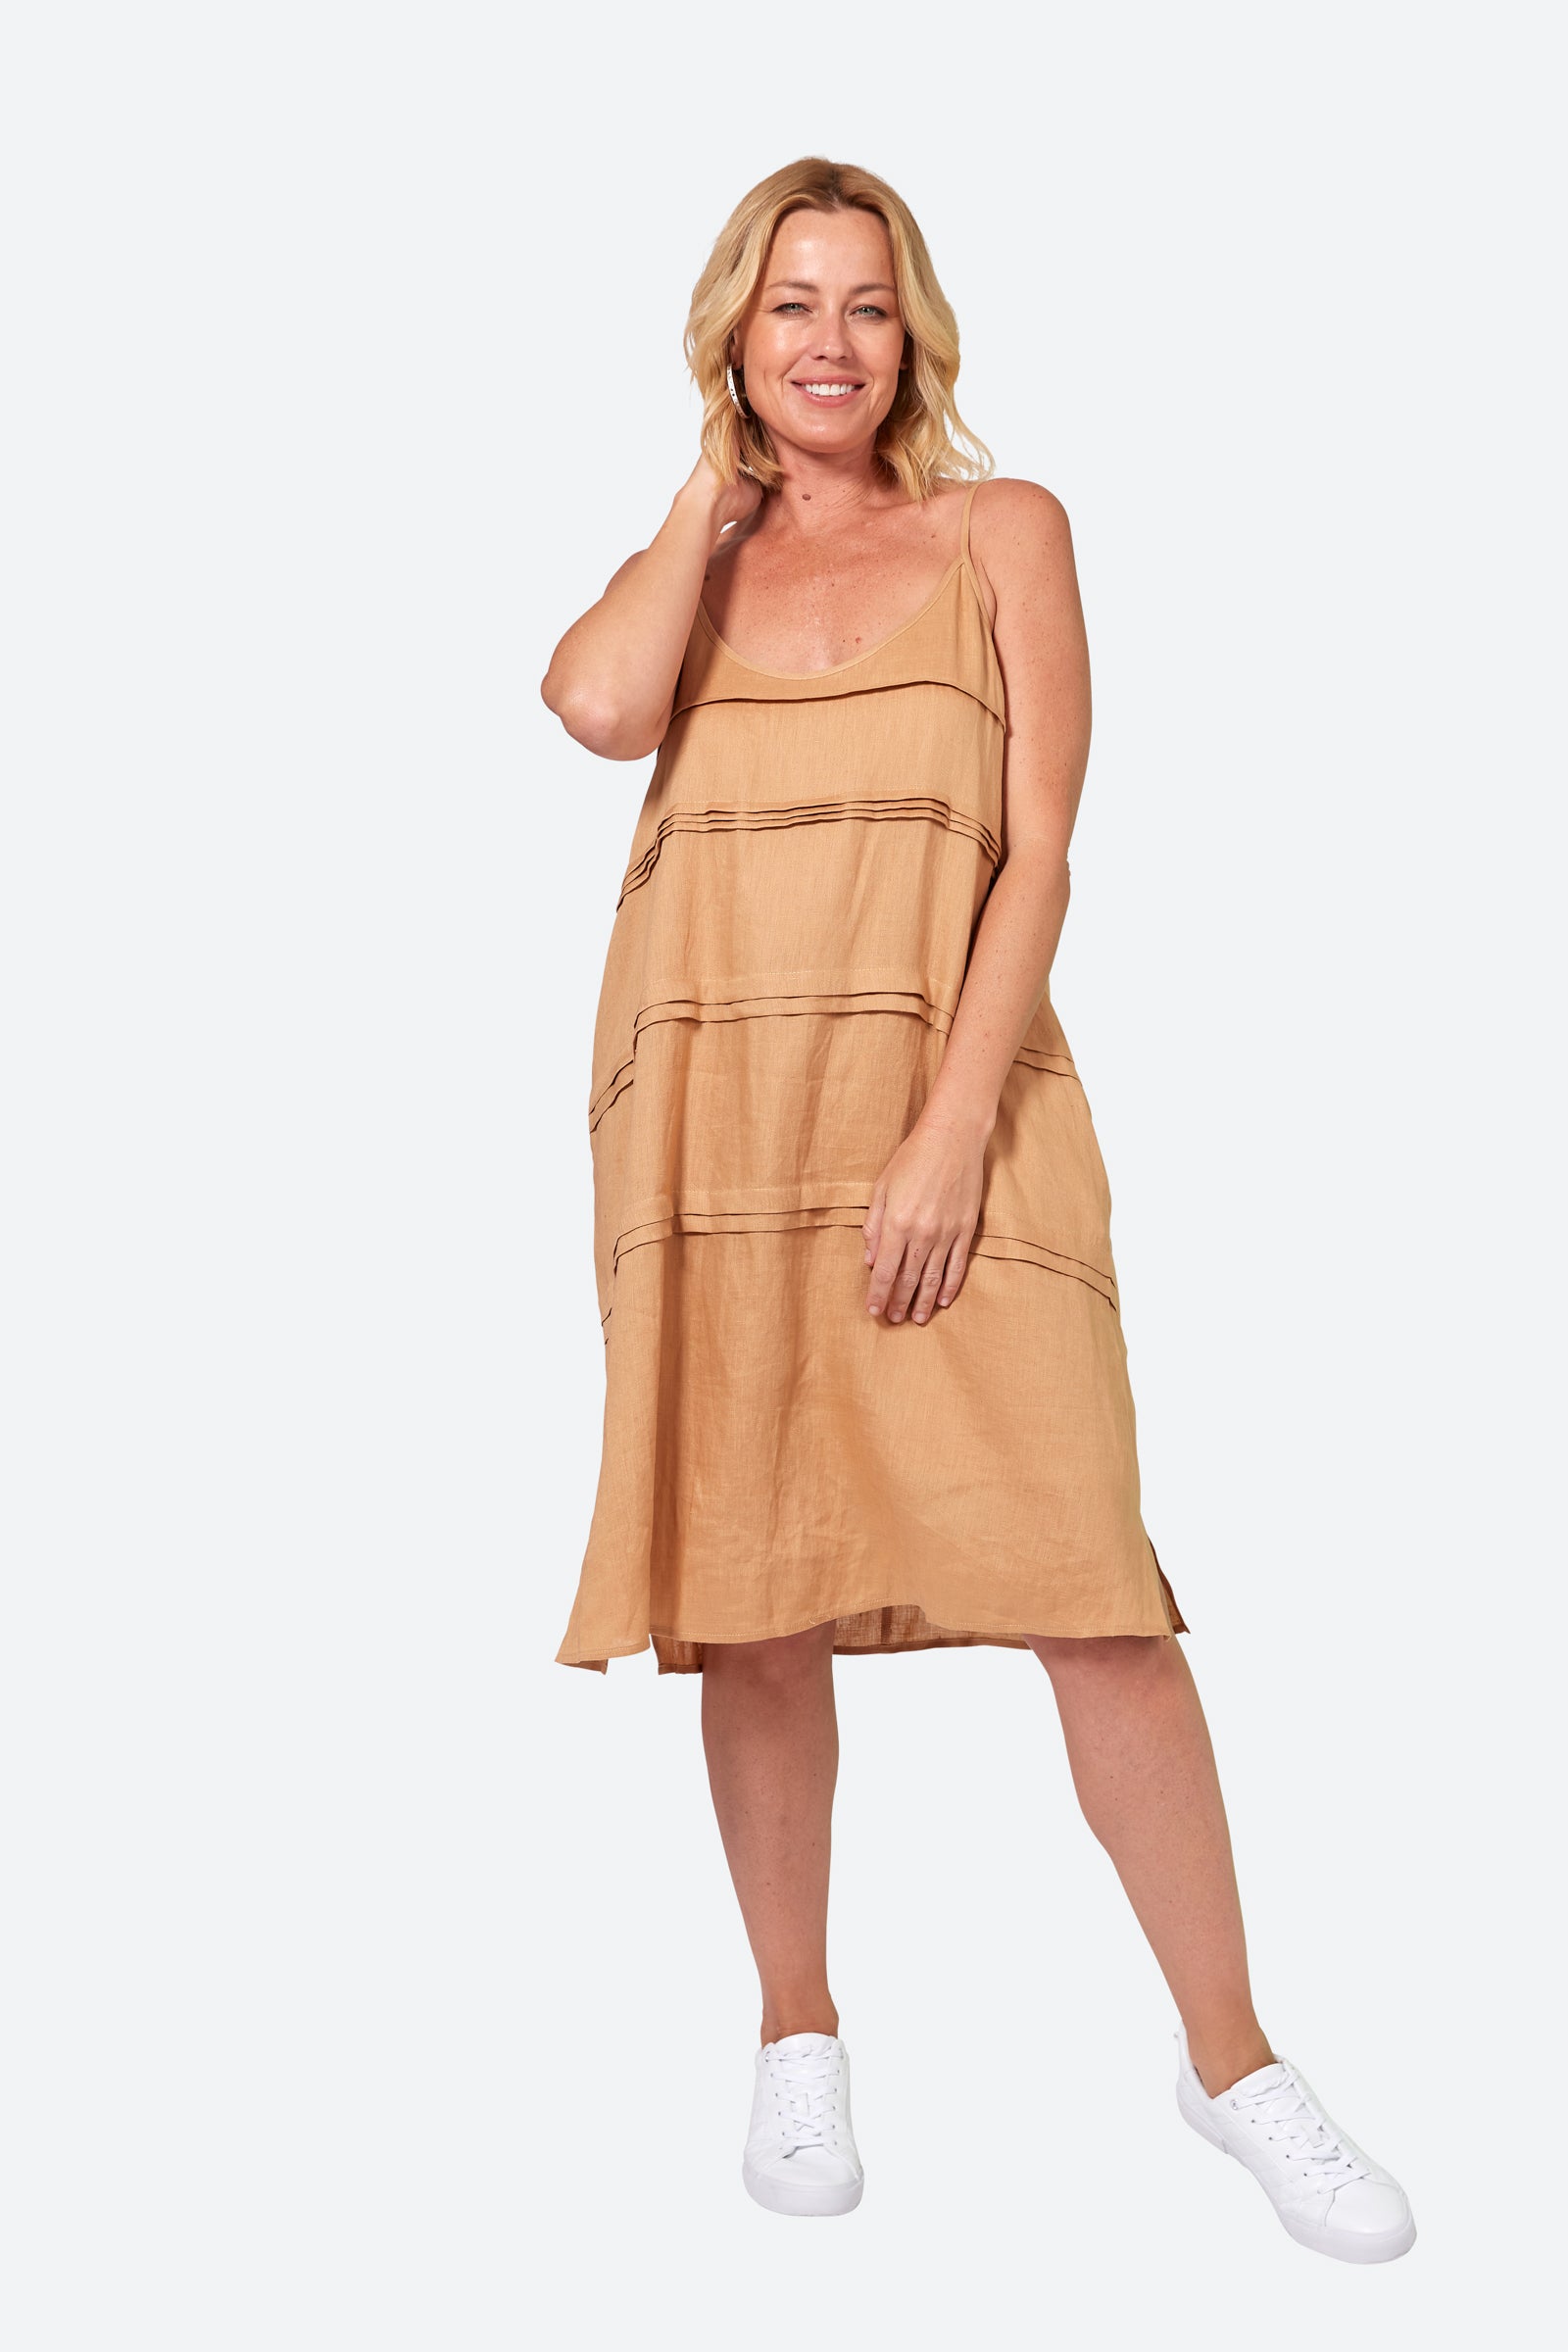 La Vie Tank Dress - Caramel - eb&ive Clothing - Dress Strappy Mid Linen